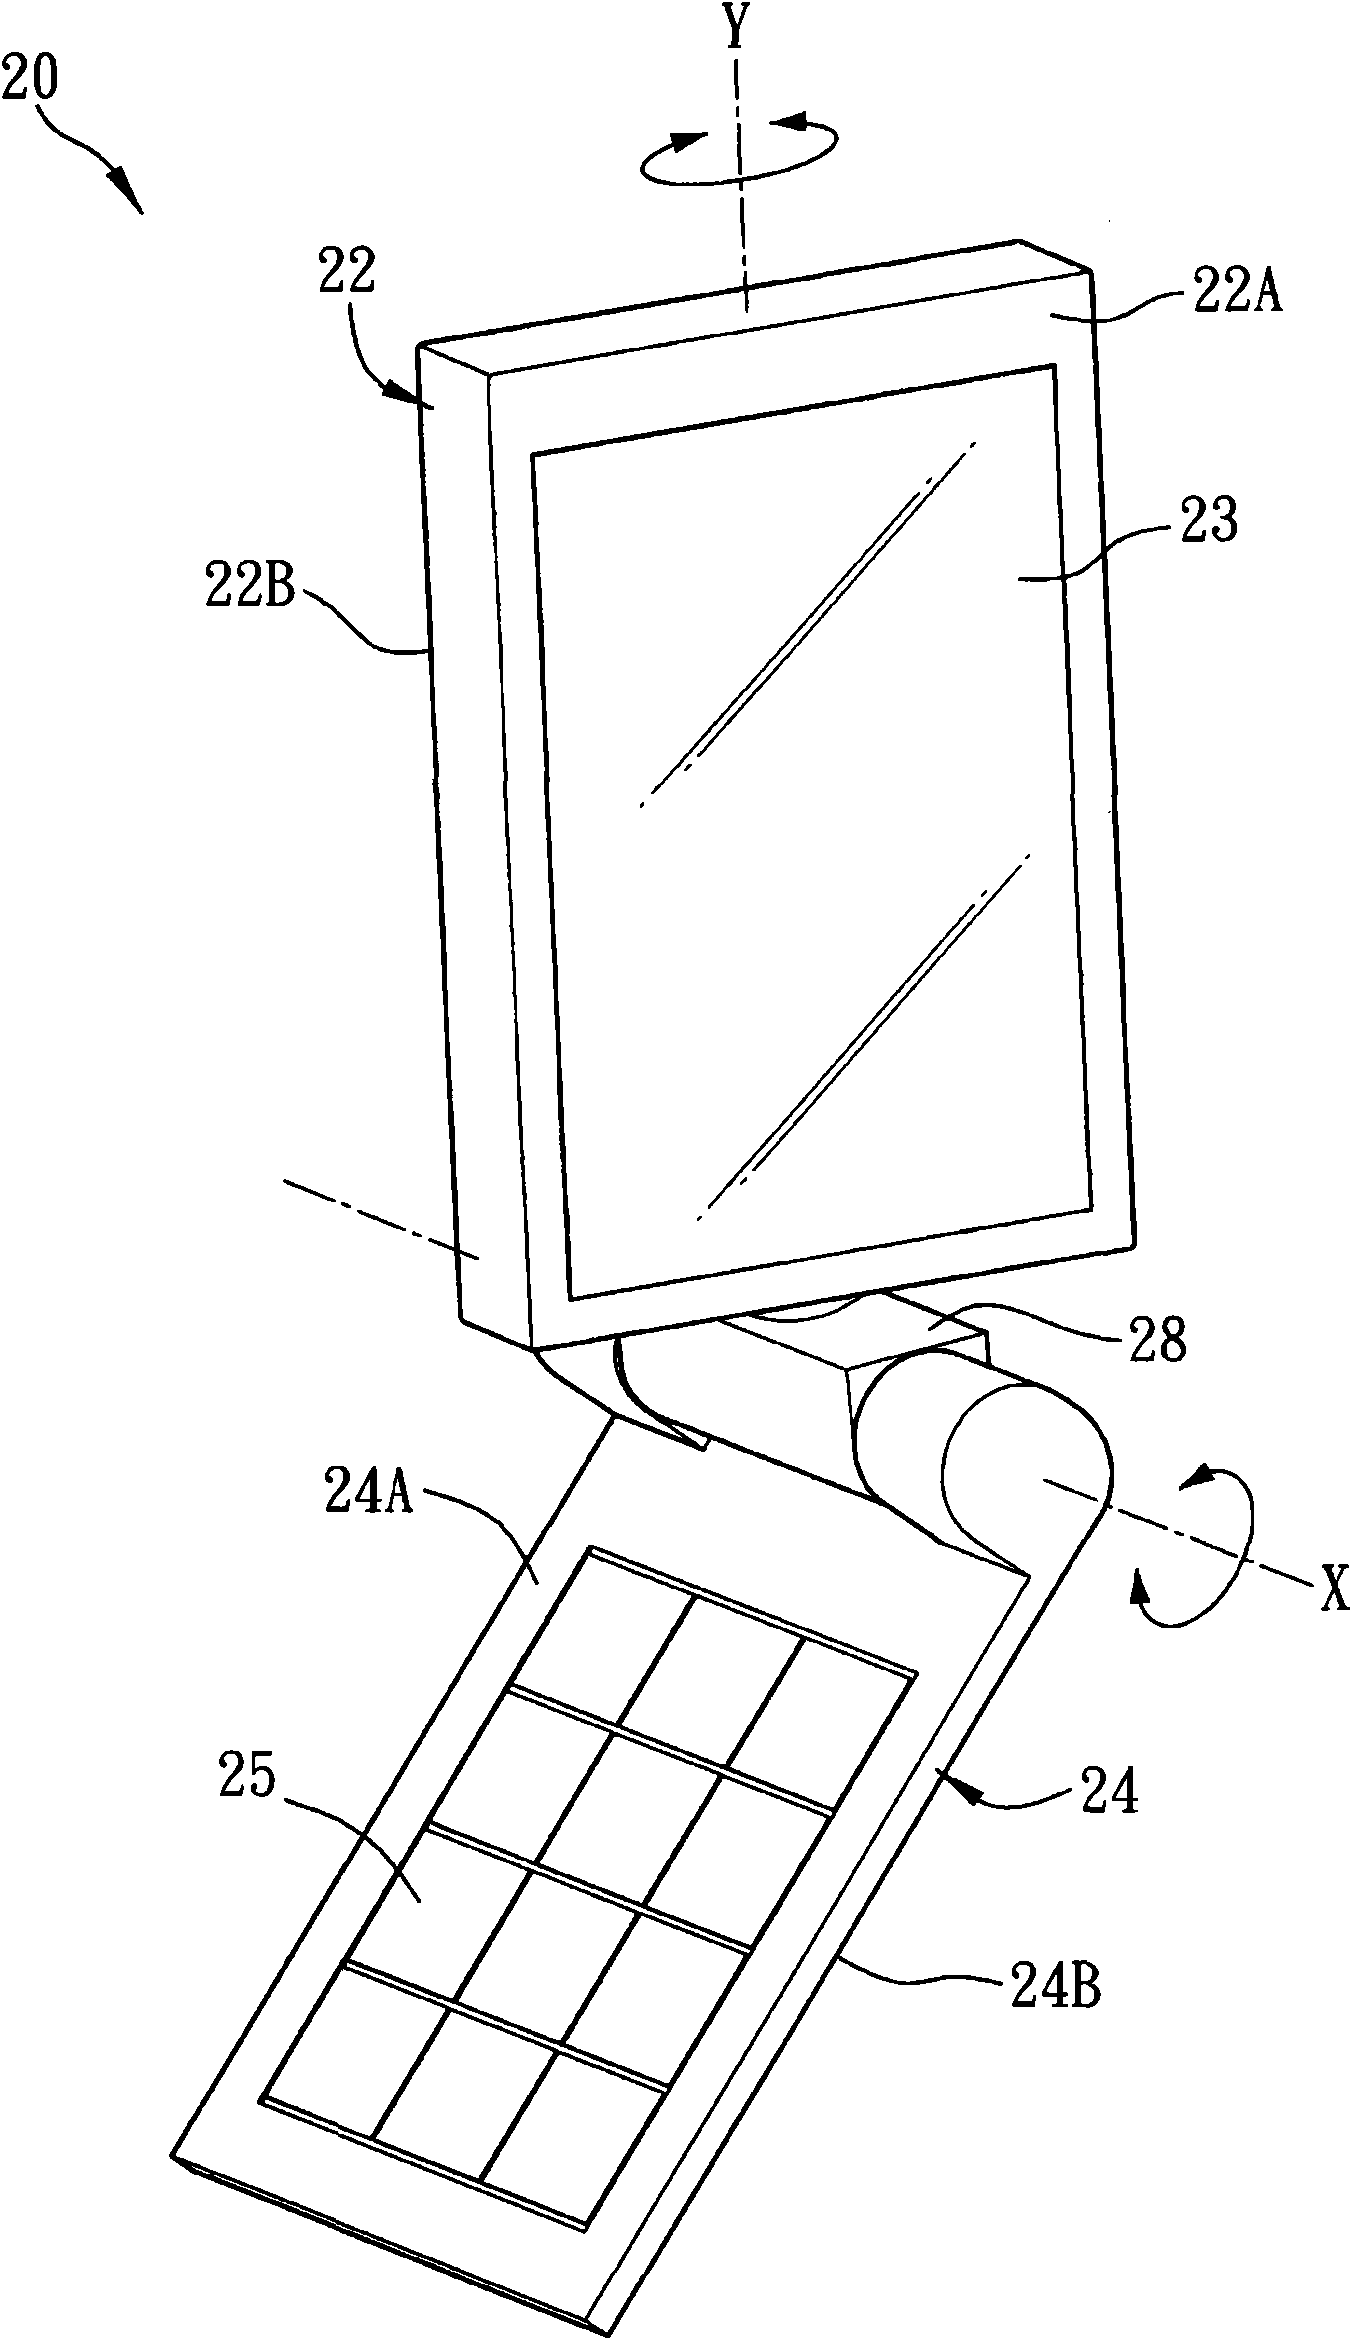 Folding mobile device